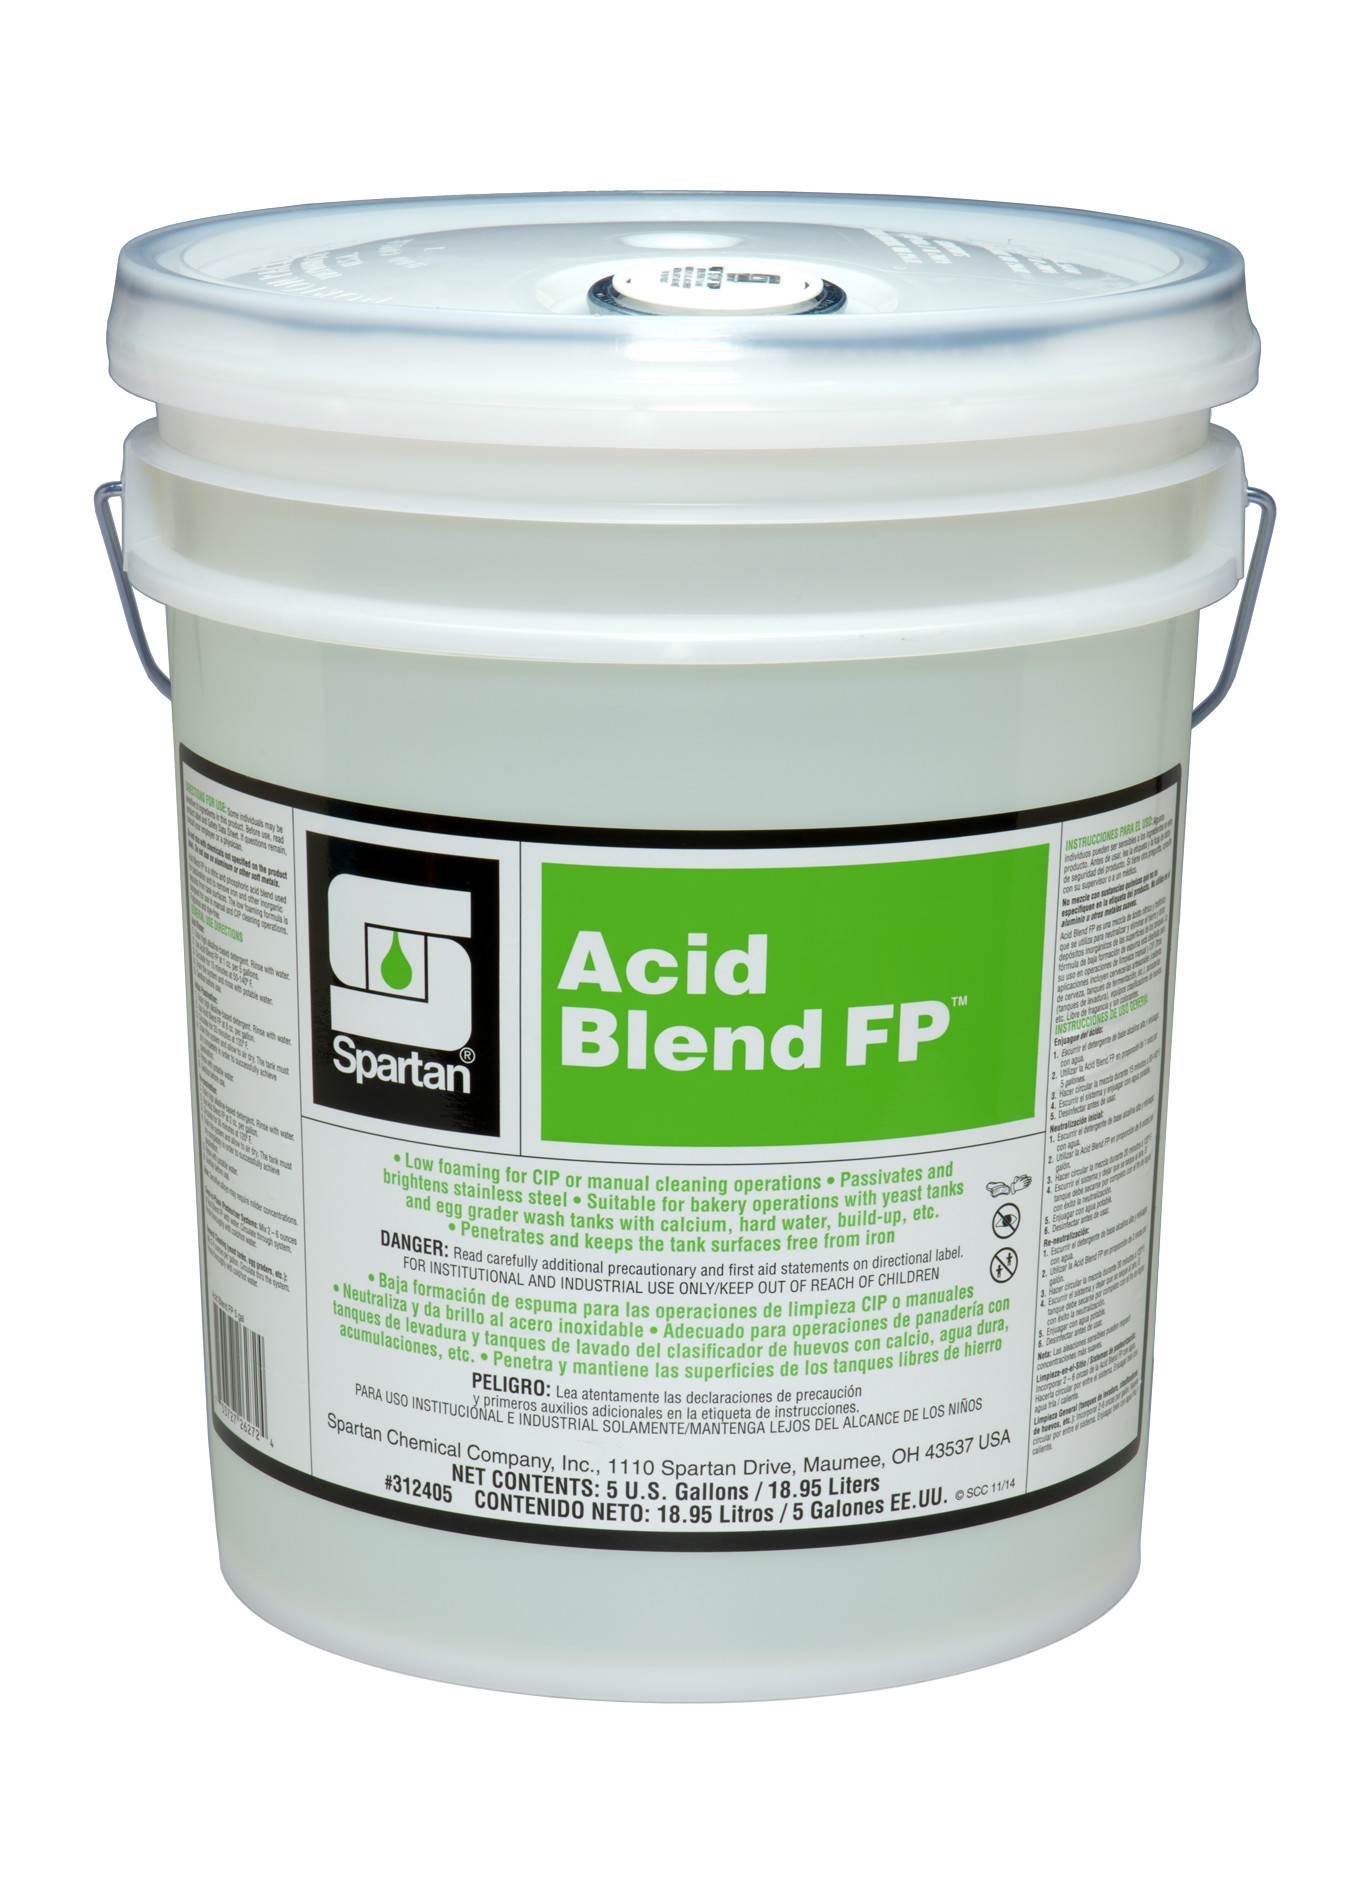 Spartan Chemical Company Acid Blend FP, 5 GAL PAIL